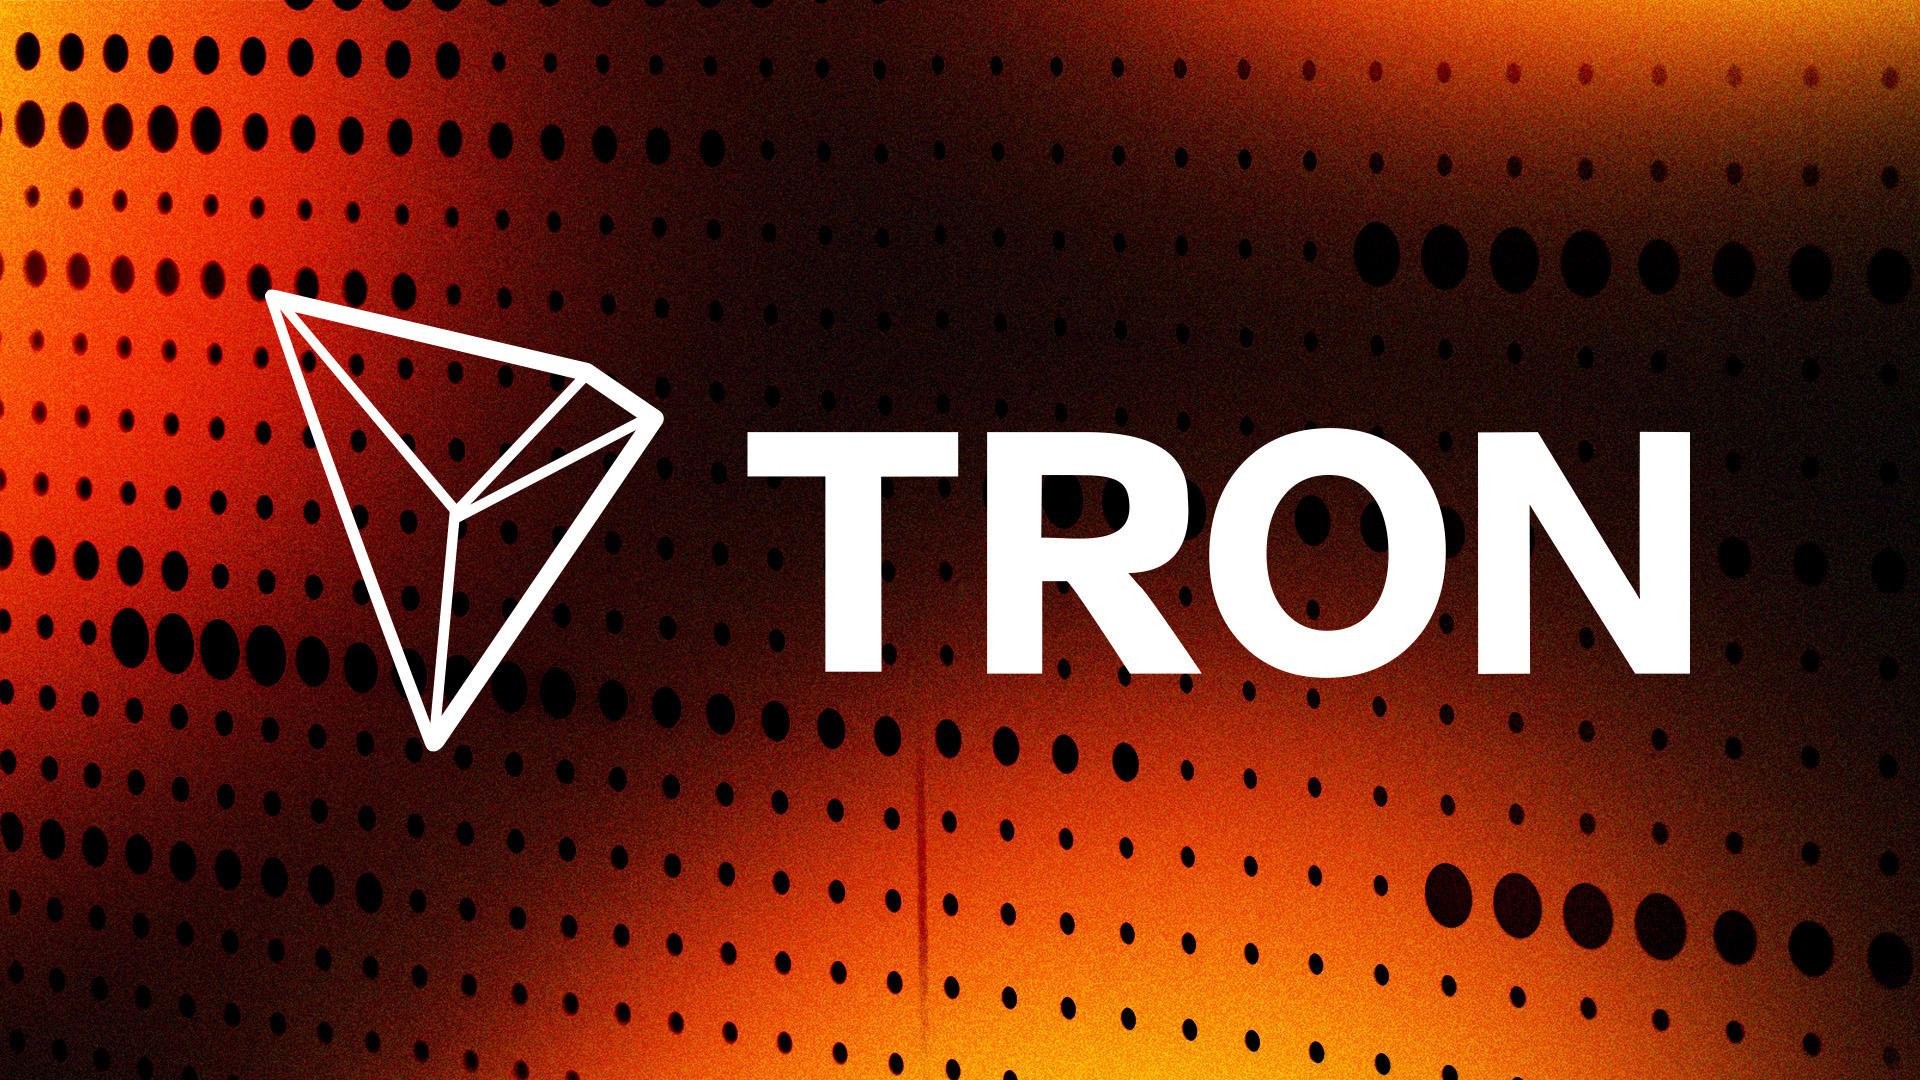 TRON (TRX) News |TRON Coin News - NewsNow